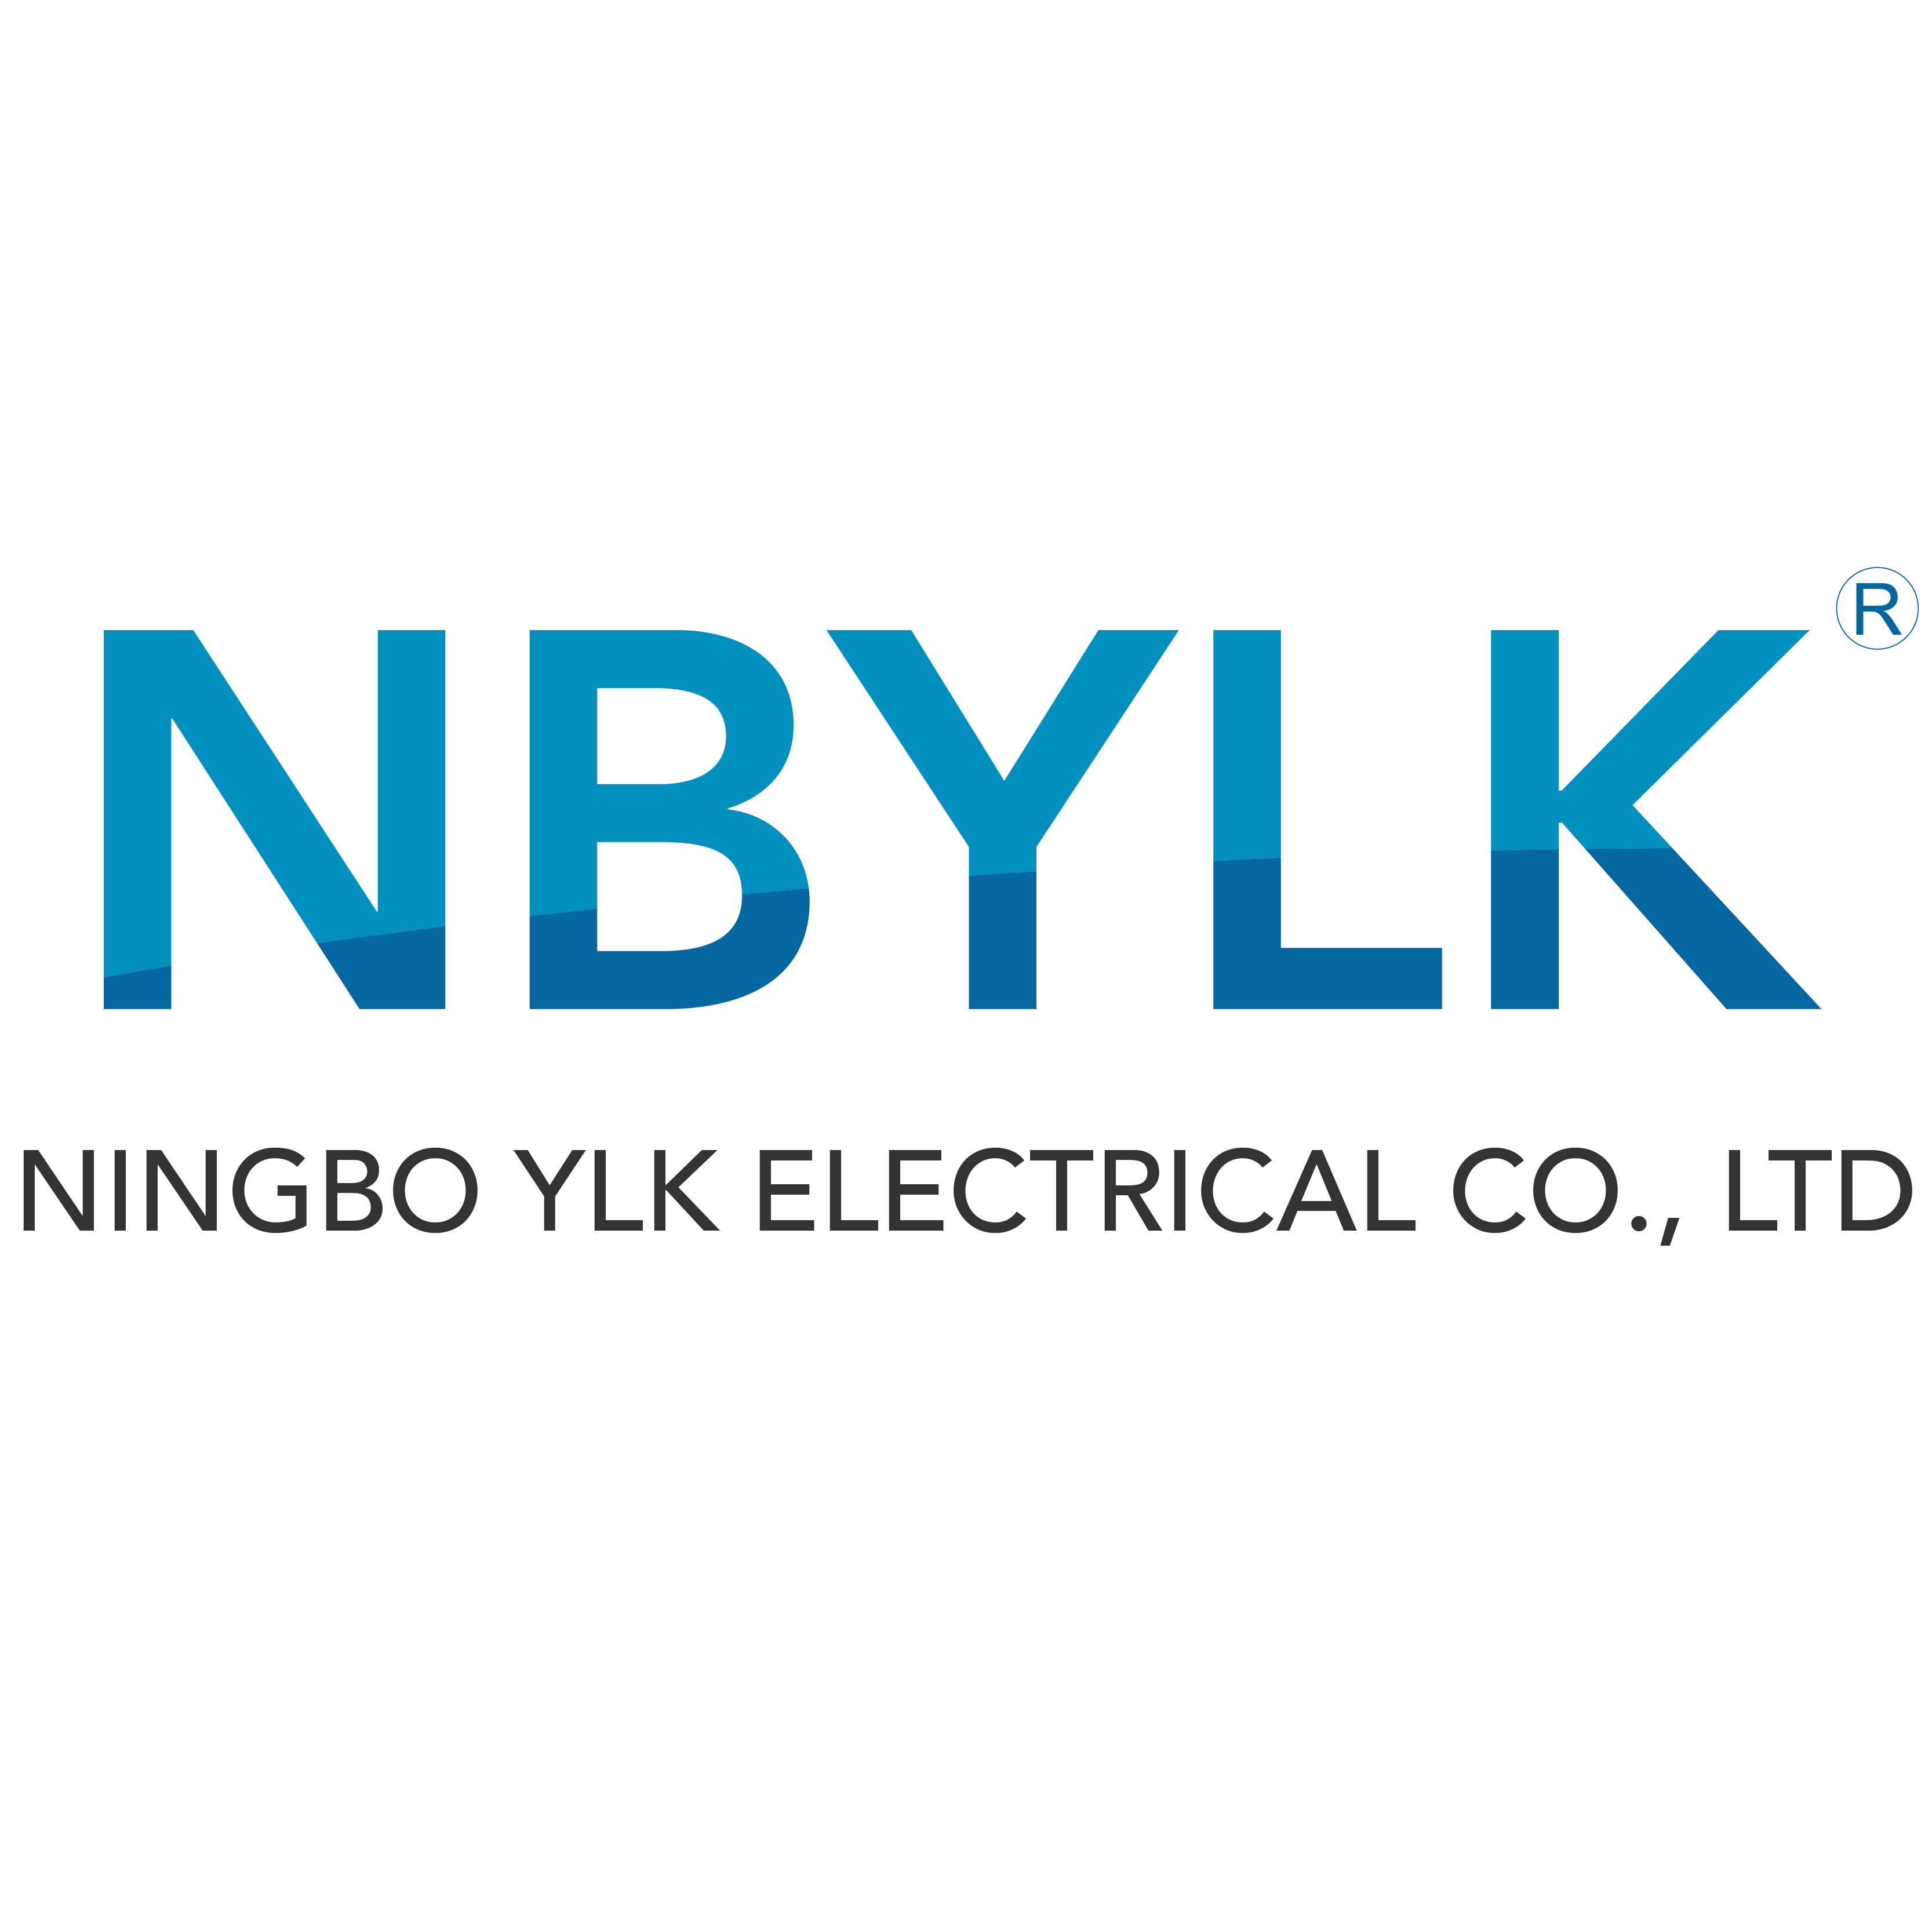 NINGBO YLK ELECTRICAL CO., LTD